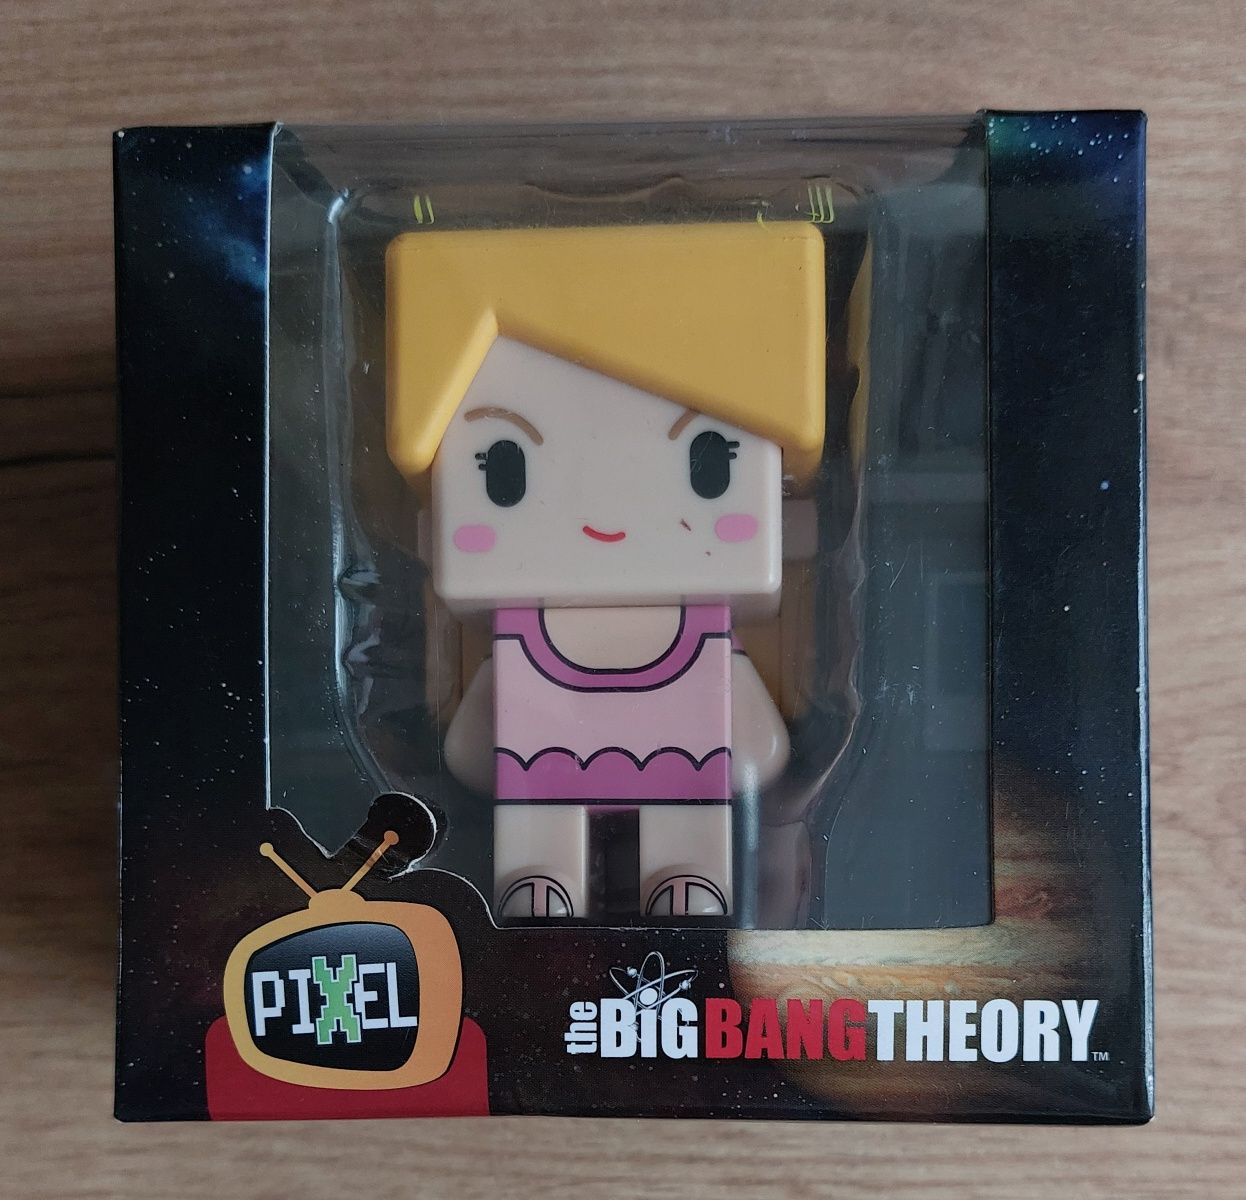 Figurka Penny The Big Bang Theory Pixel - Teoria Wielkiego Podrywu